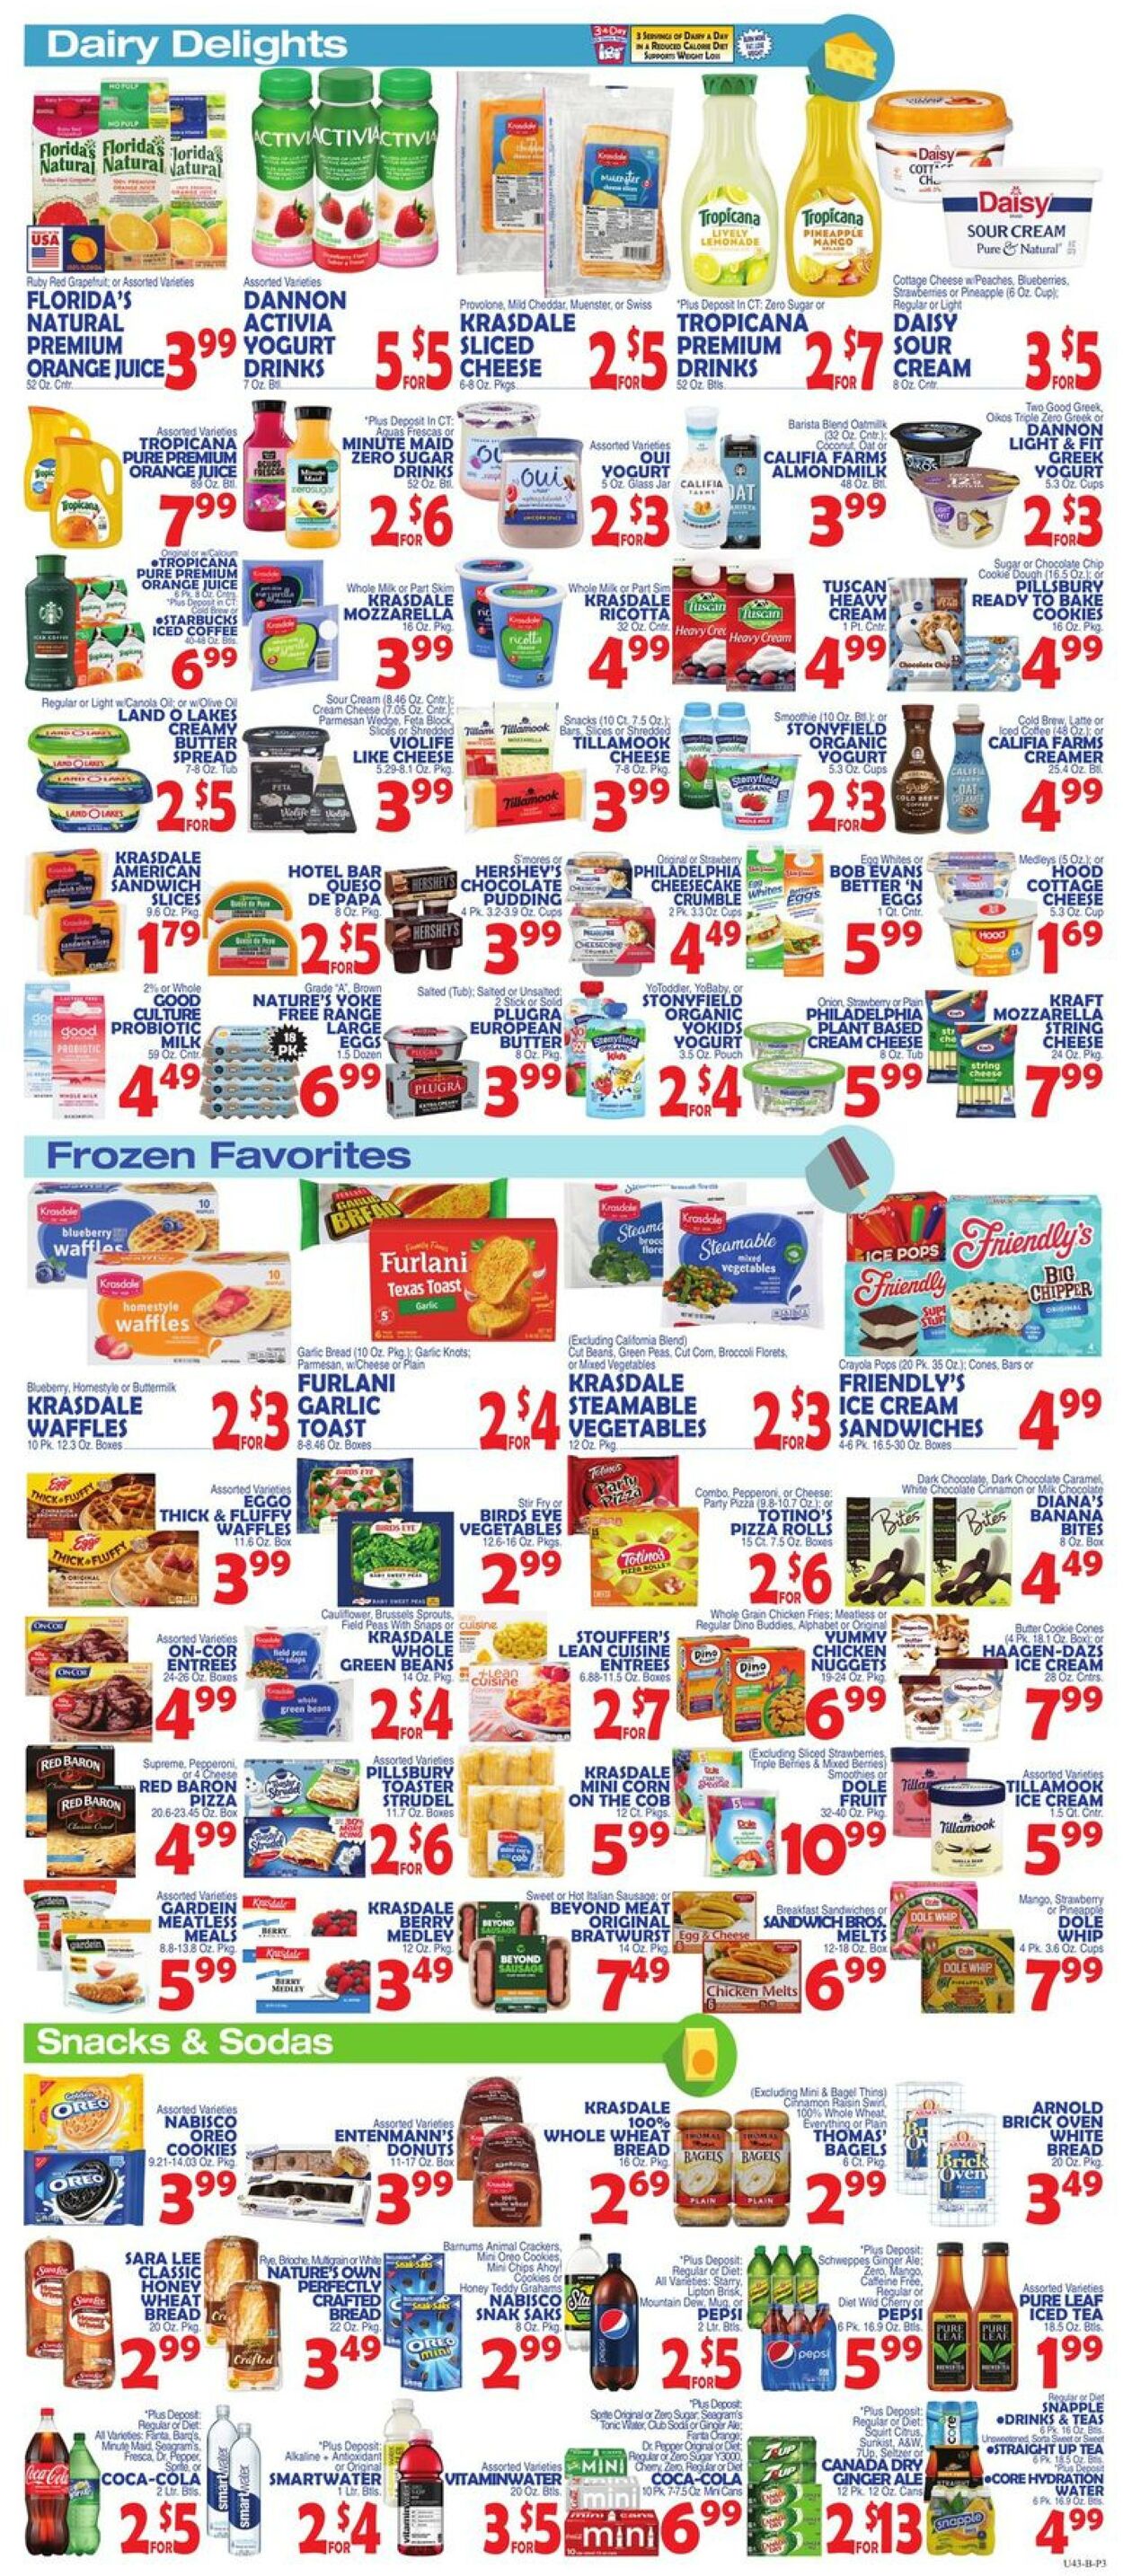 Weekly ad Bravo Supermarkets 04/12/2024 - 04/18/2024